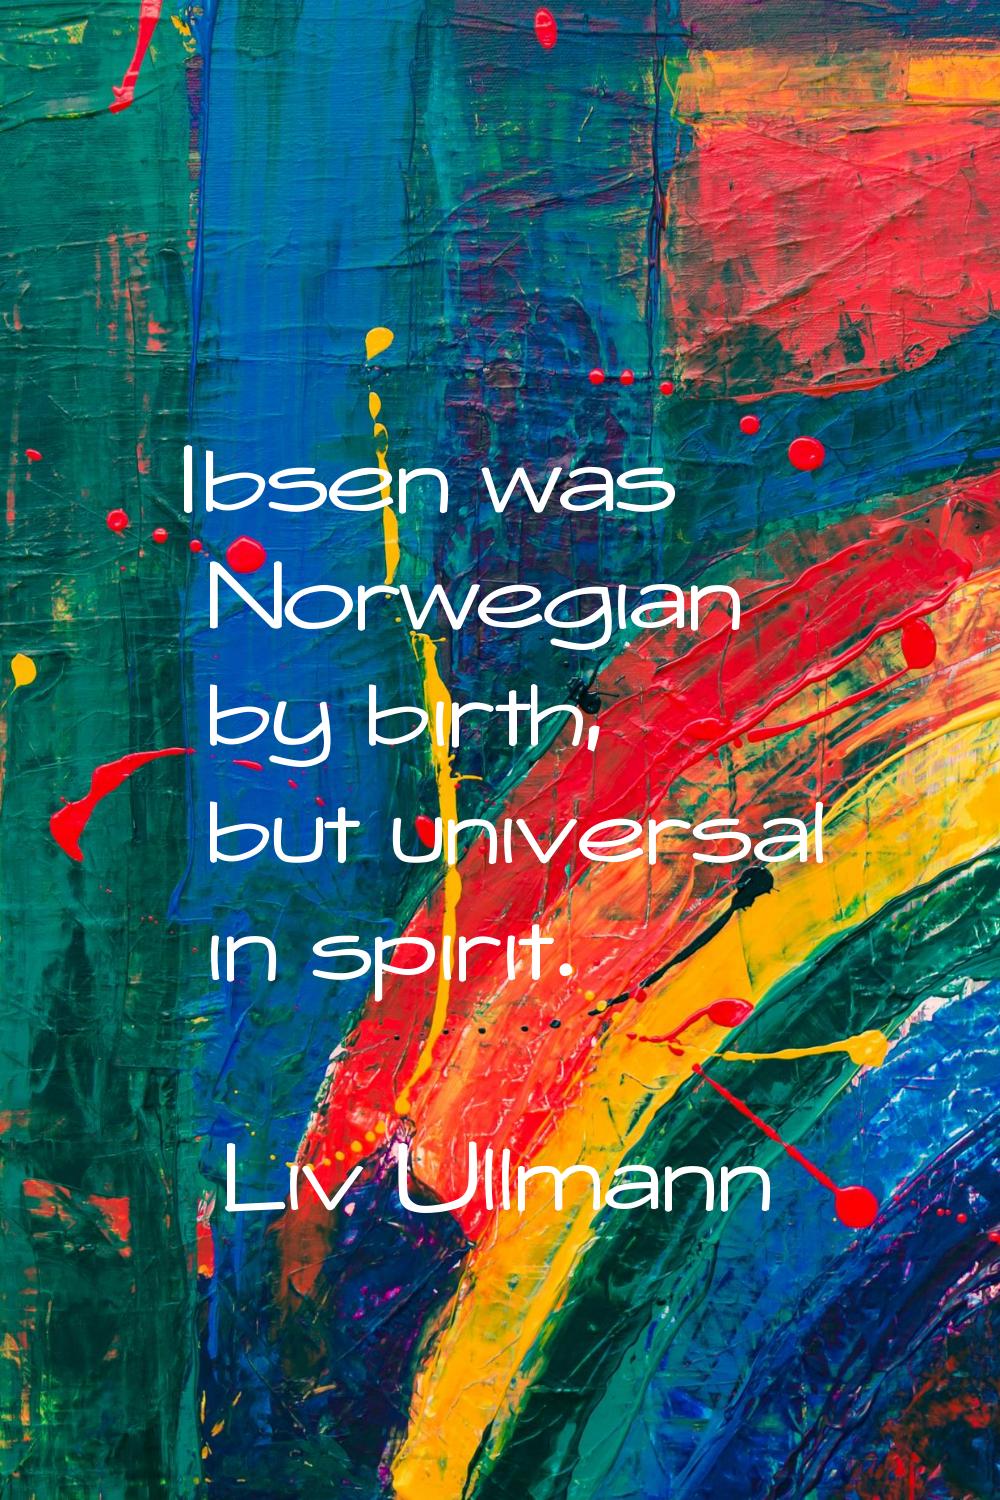 Ibsen was Norwegian by birth, but universal in spirit.